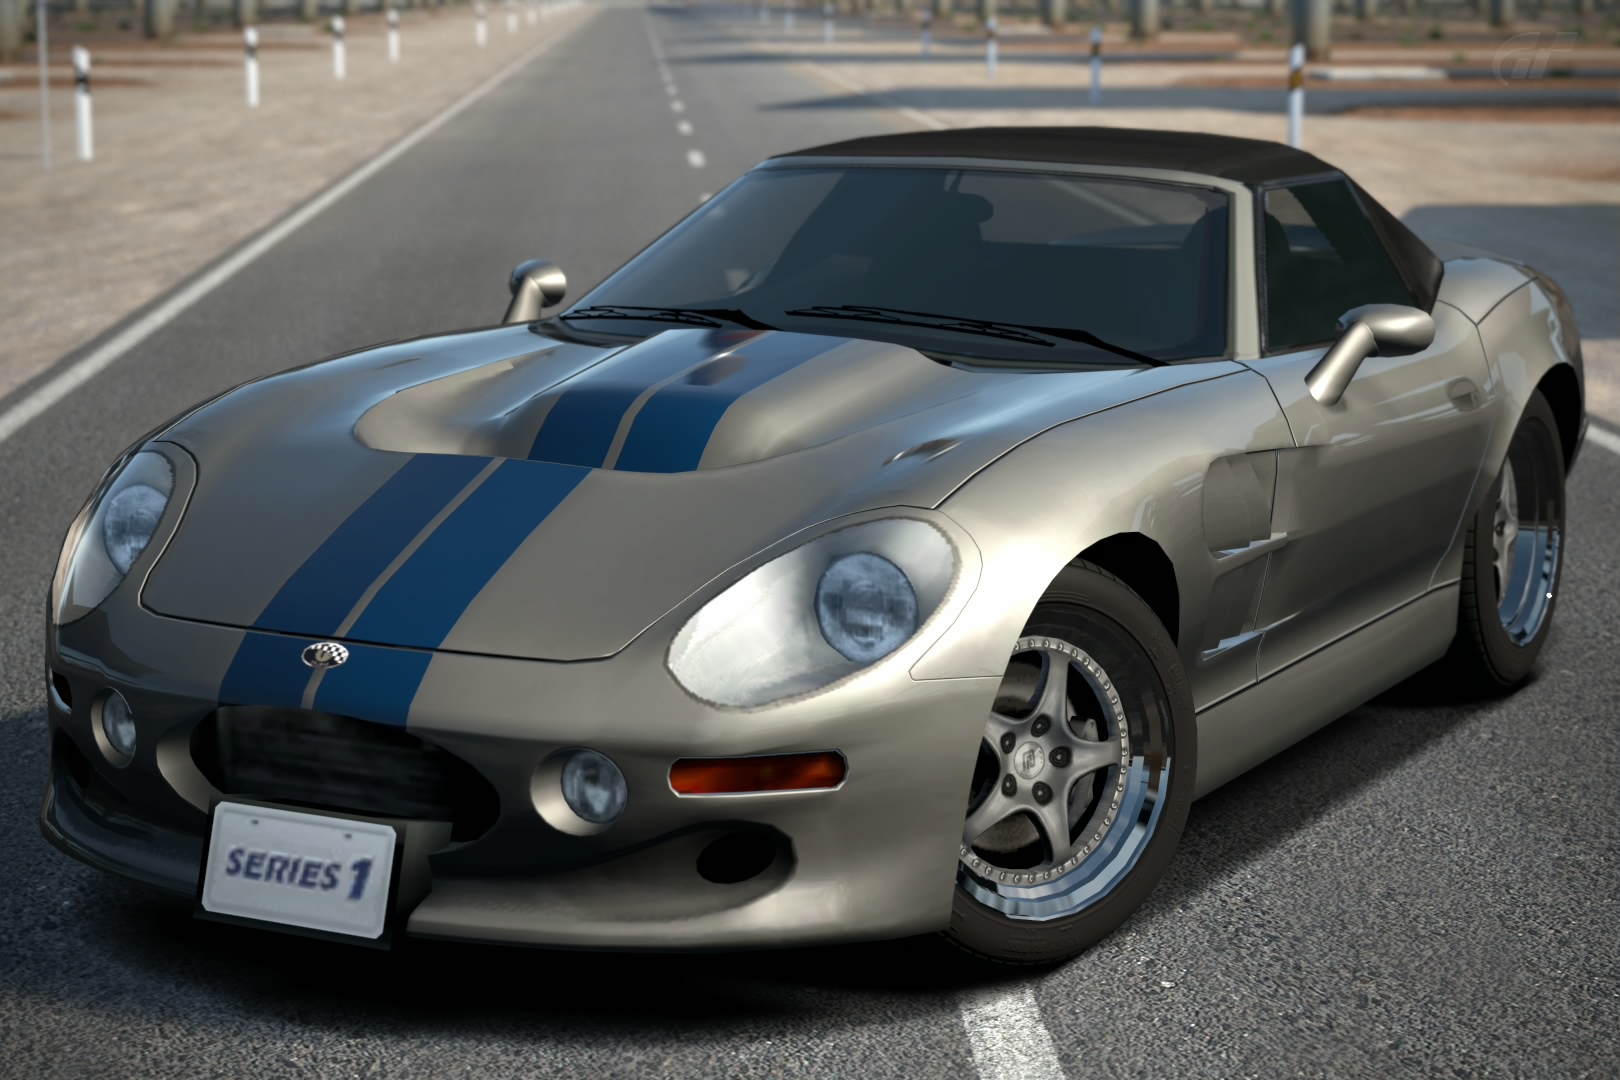  Shelby Cobra in Gran Turismo 4